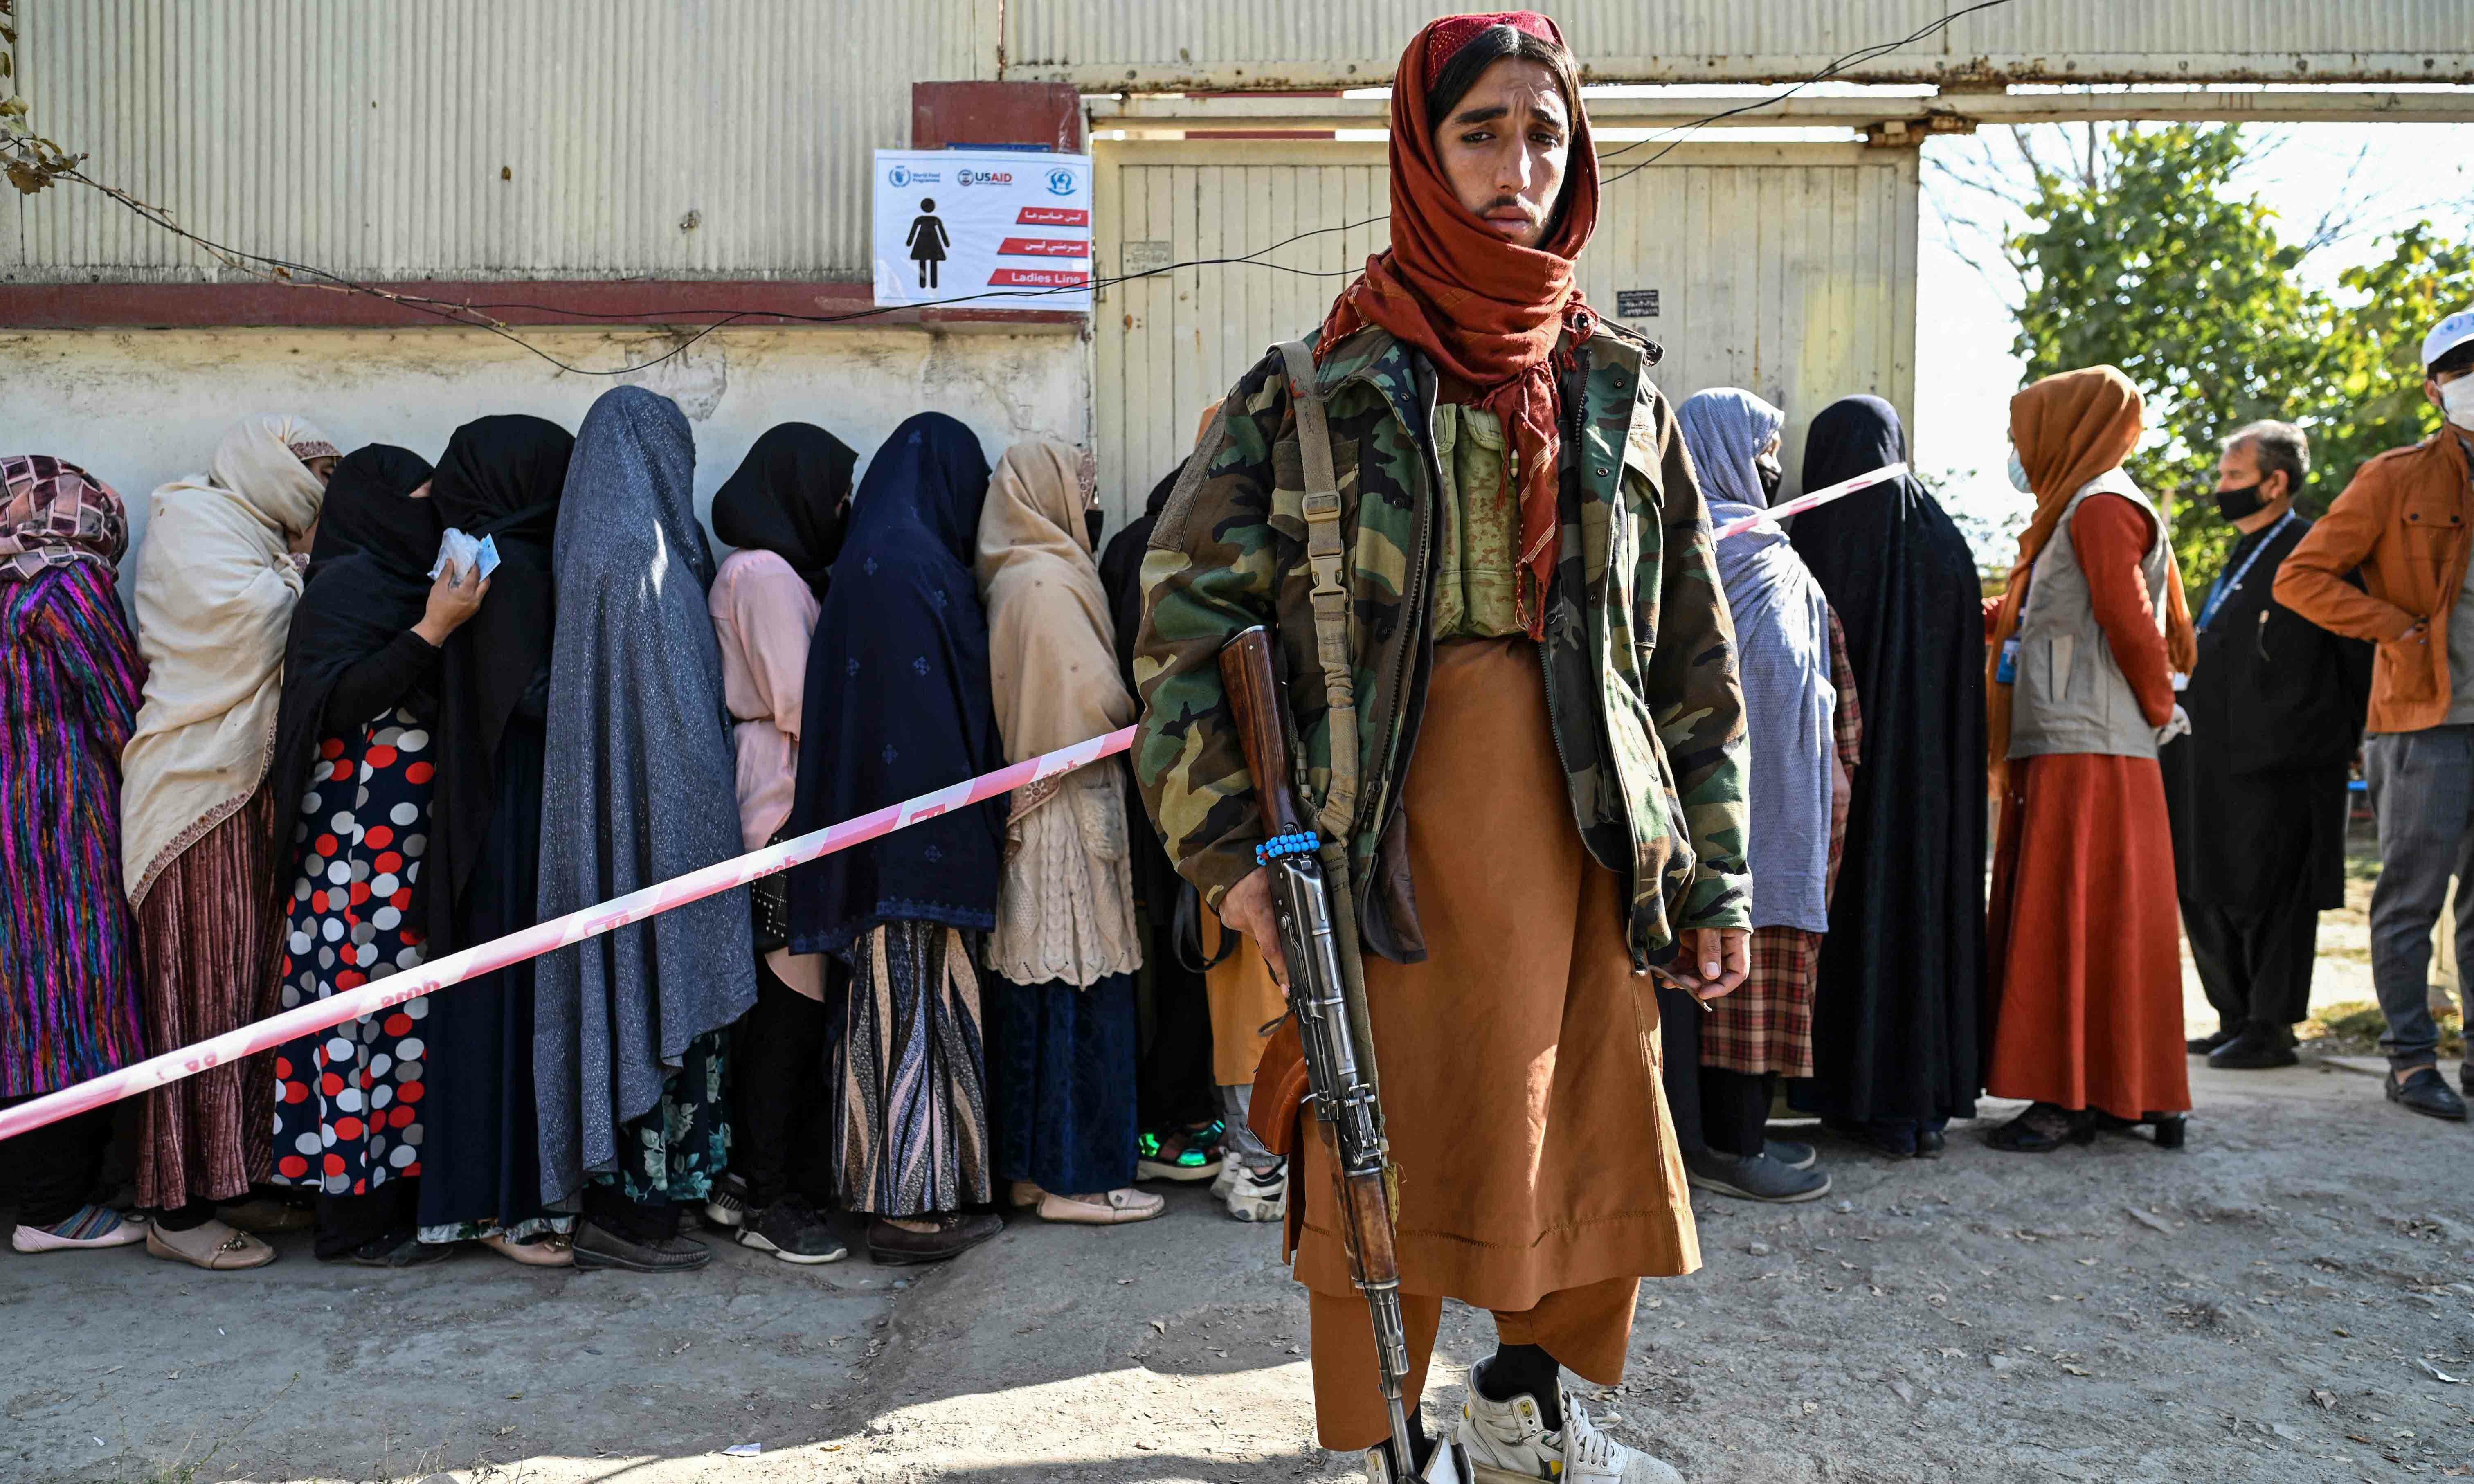 55pc of Afghan population faces food crisis, warns UN - November 7, 2021